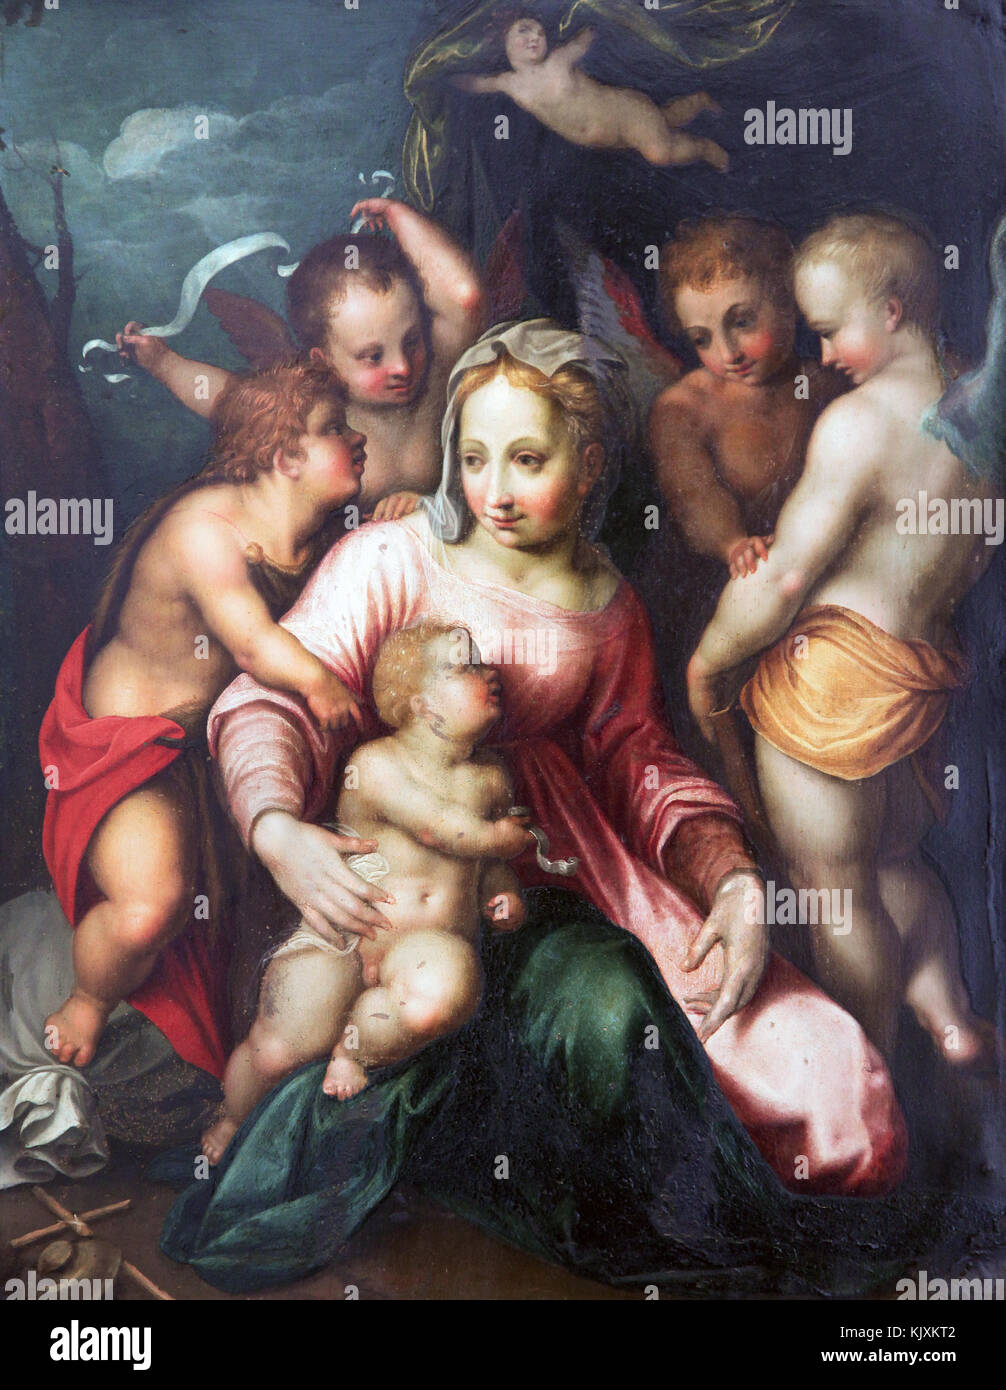 Jungfrau mit Kind aus dem 16. Jahrhundert Malerei. Nach Andrea del Sarto 1486-1530 Stockfoto